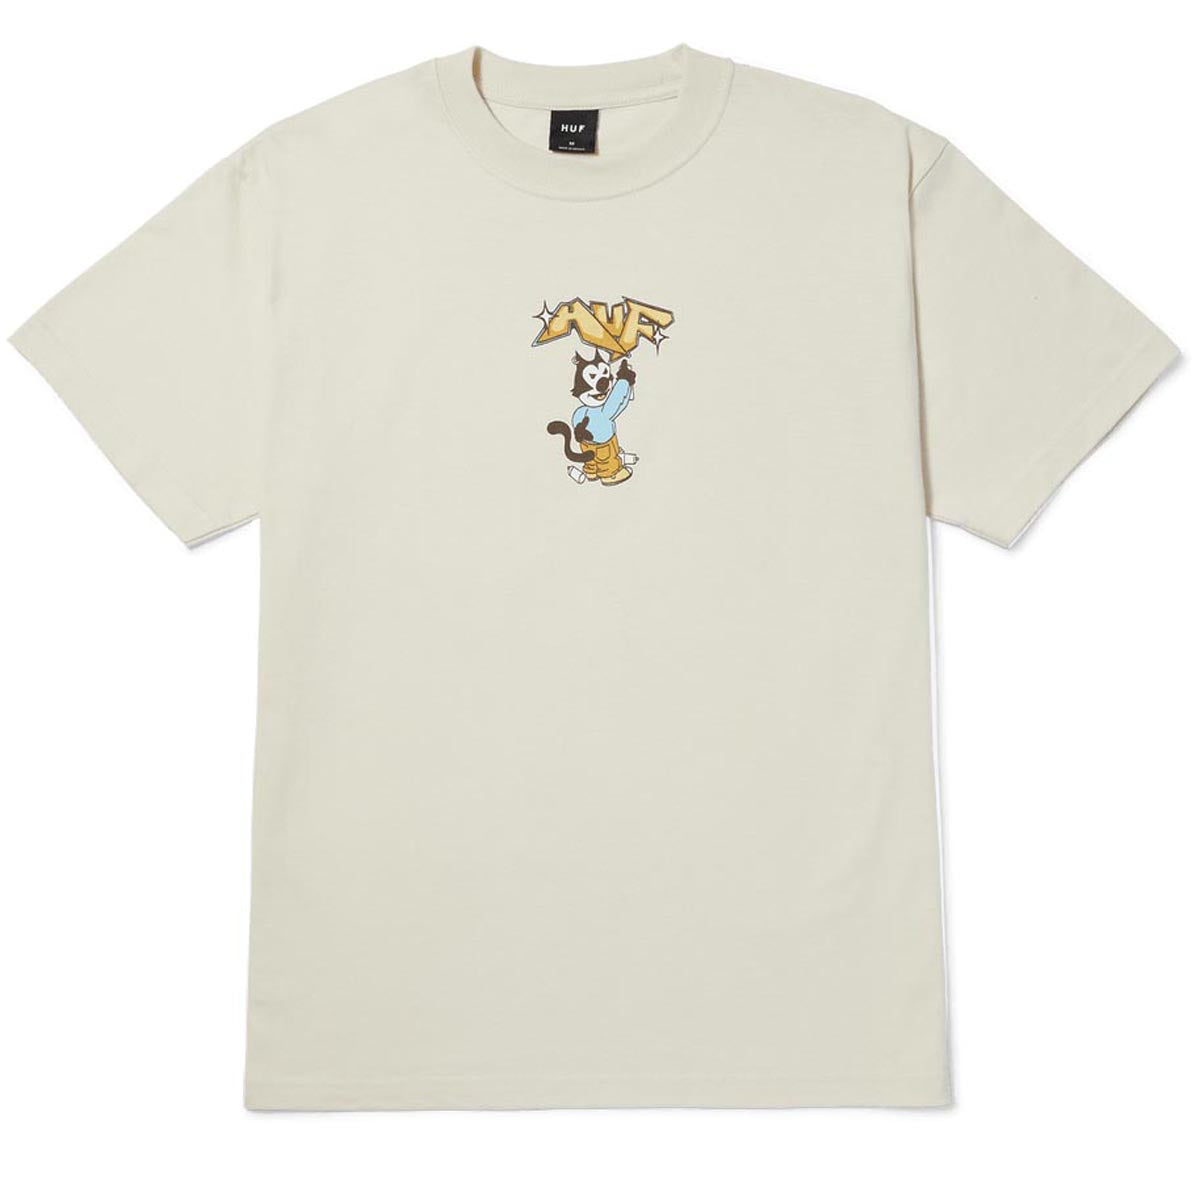 HUF Bad Cat T-Shirt - Bone image 1